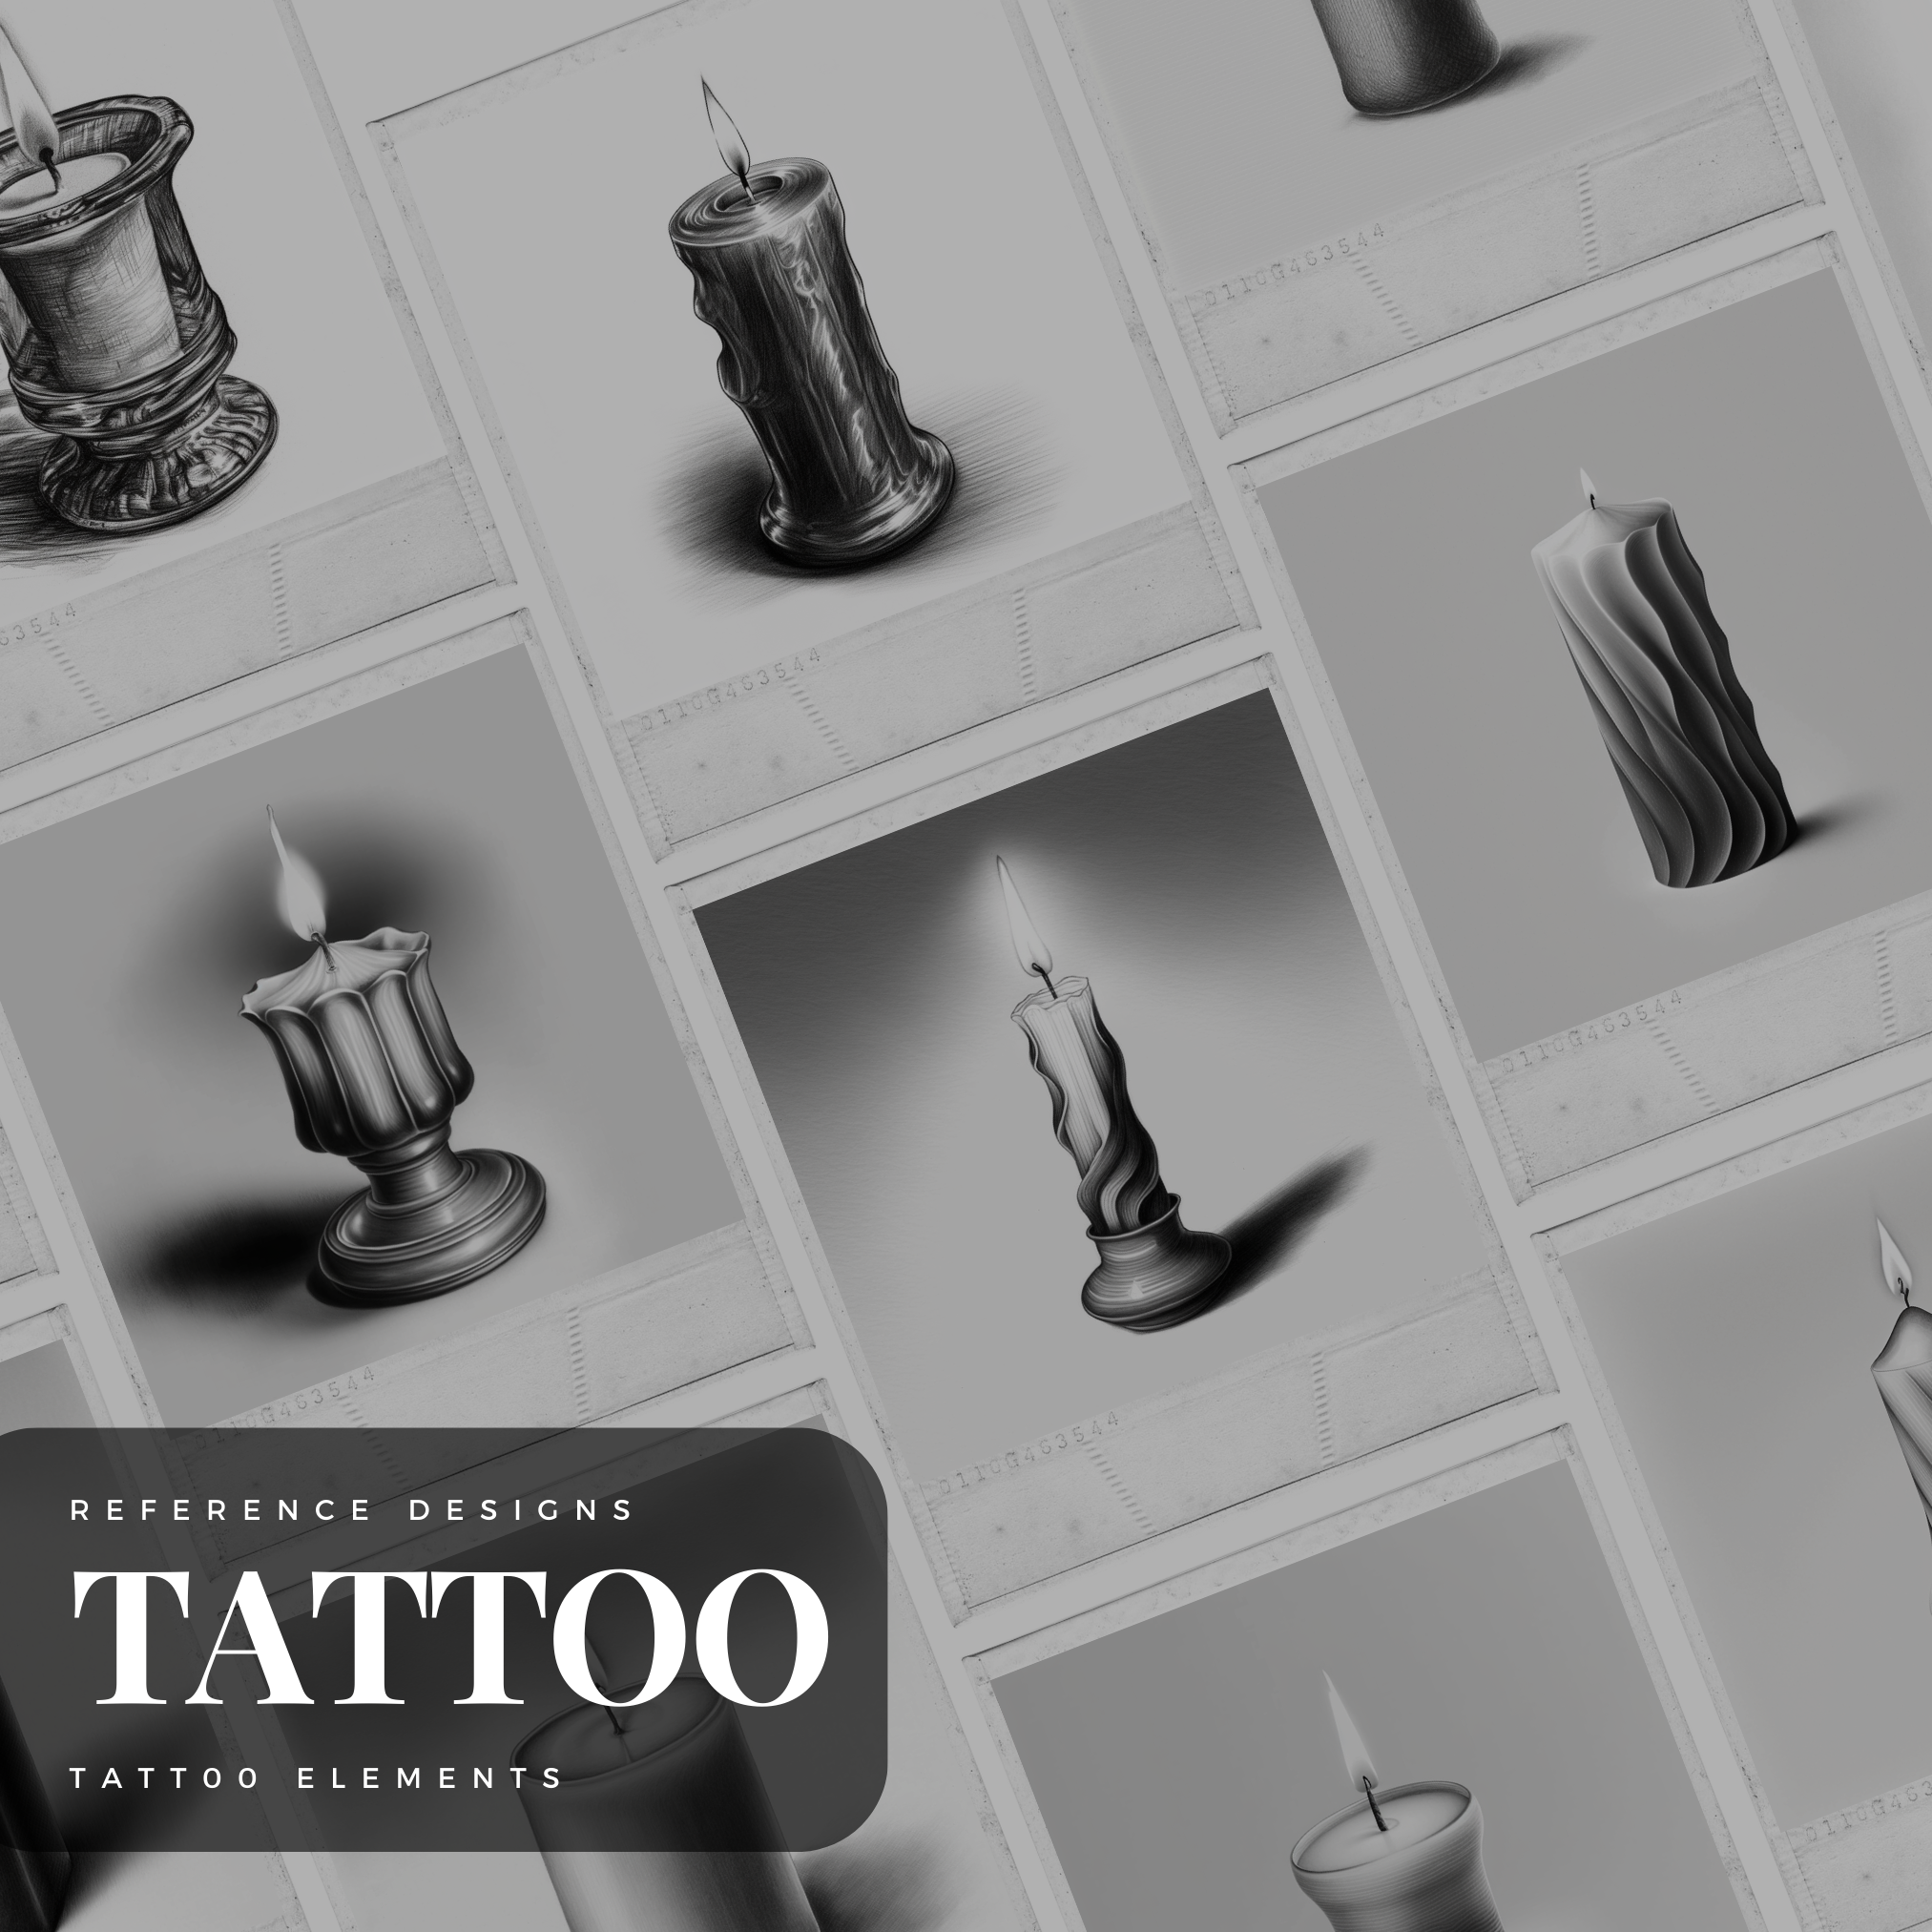 Candles Digital Tattoo Element Design Collection: 100 Procreate & Sketchbook Images